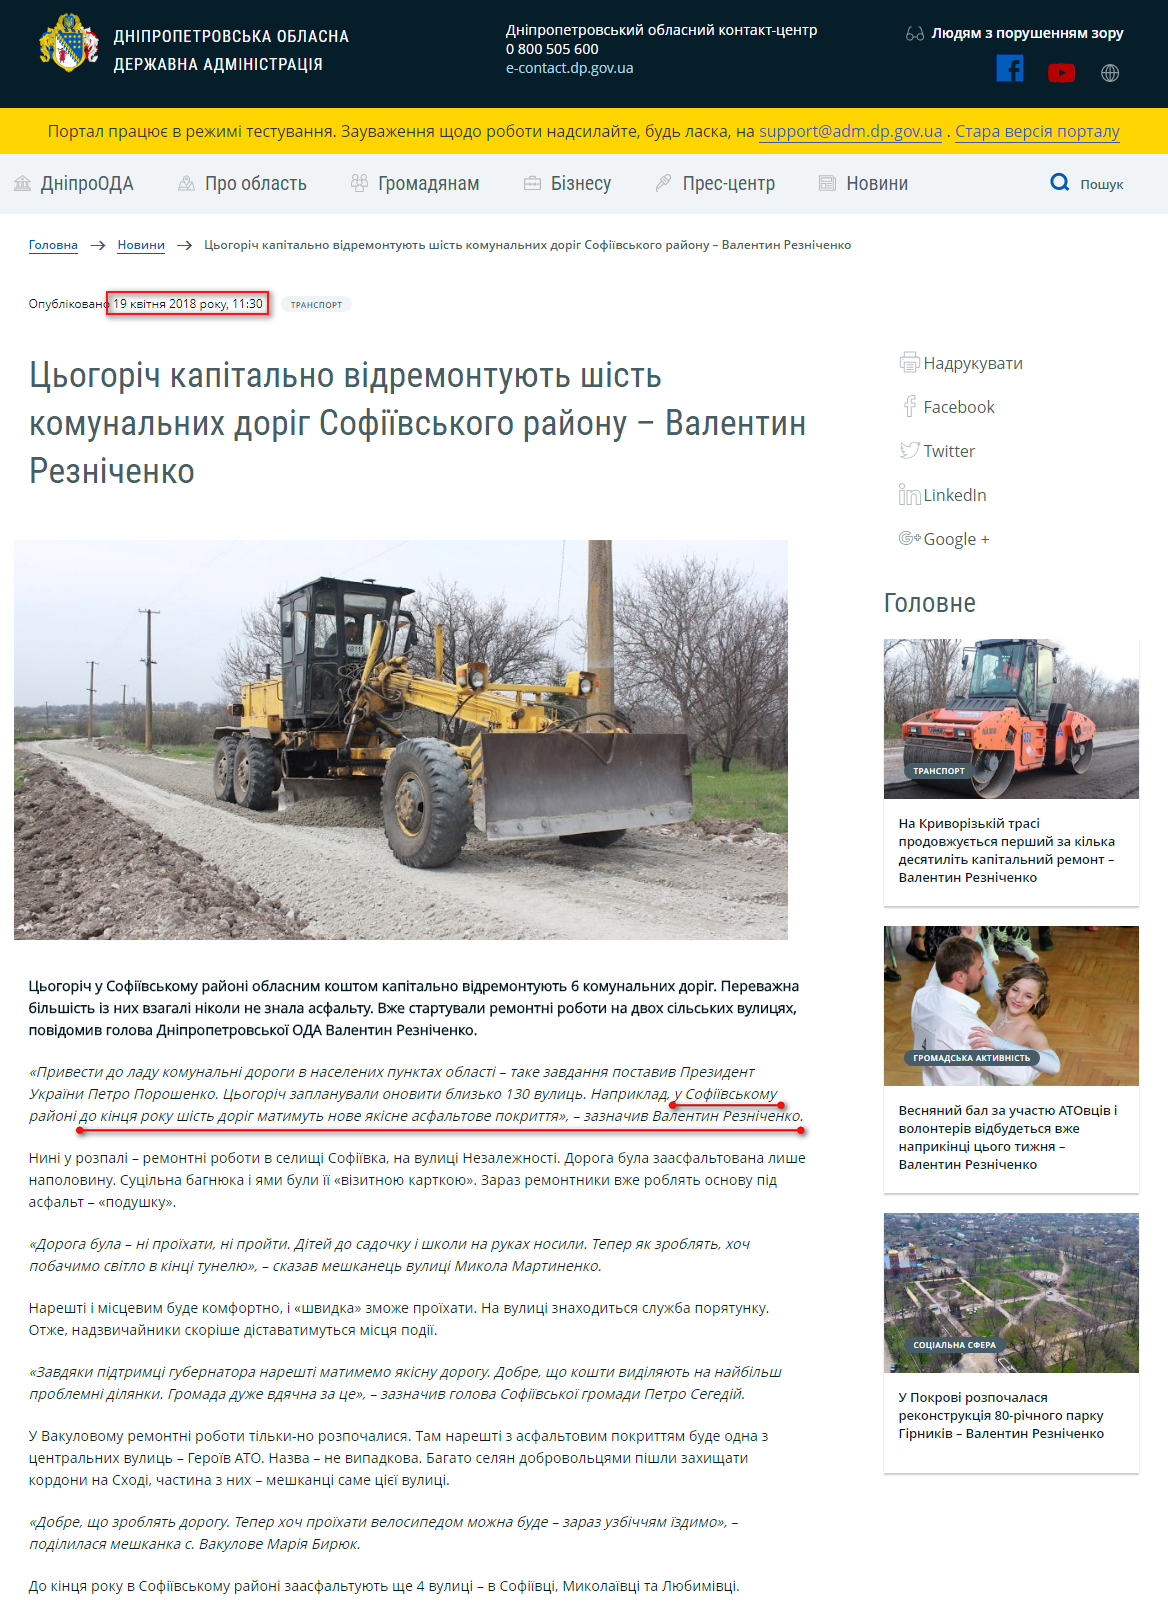 https://adm.dp.gov.ua/ua/news/cogorich-kapitalno-vidremontuyut-shist-komunalnih-dorig-sofiyivskogo-rajonu-valentin-reznichenko